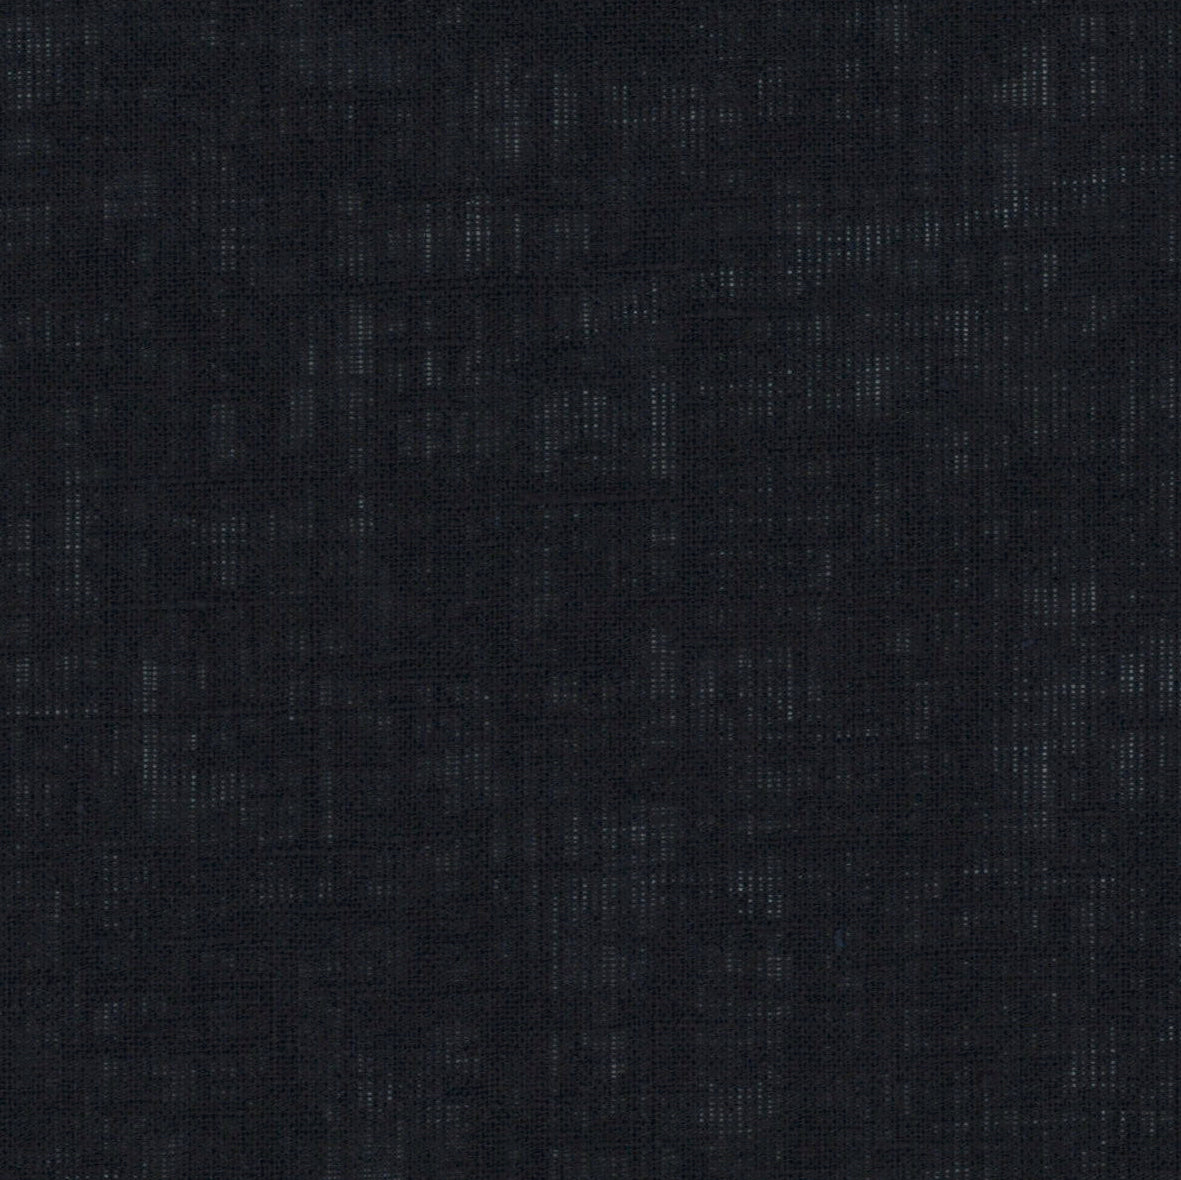 36011-03 Navy Linen Plain Dyed Blend 180g.yd 53&quot; blend blue linen plain dyed polyester woven Solid Color - knit fabric - woven fabric - fabric company - fabric wholesale - fabric b2b - fabric factory - high quality fabric - hong kong fabric - fabric hk - acetate fabric - cotton fabric - linen fabric - metallic fabric - nylon fabric - polyester fabric - spandex fabric - chun wing hing - cwh hk - fabric worldwide ship - 針織布 - 梳織布 - 布料公司- 布料批發 - 香港布料 - 秦榮興